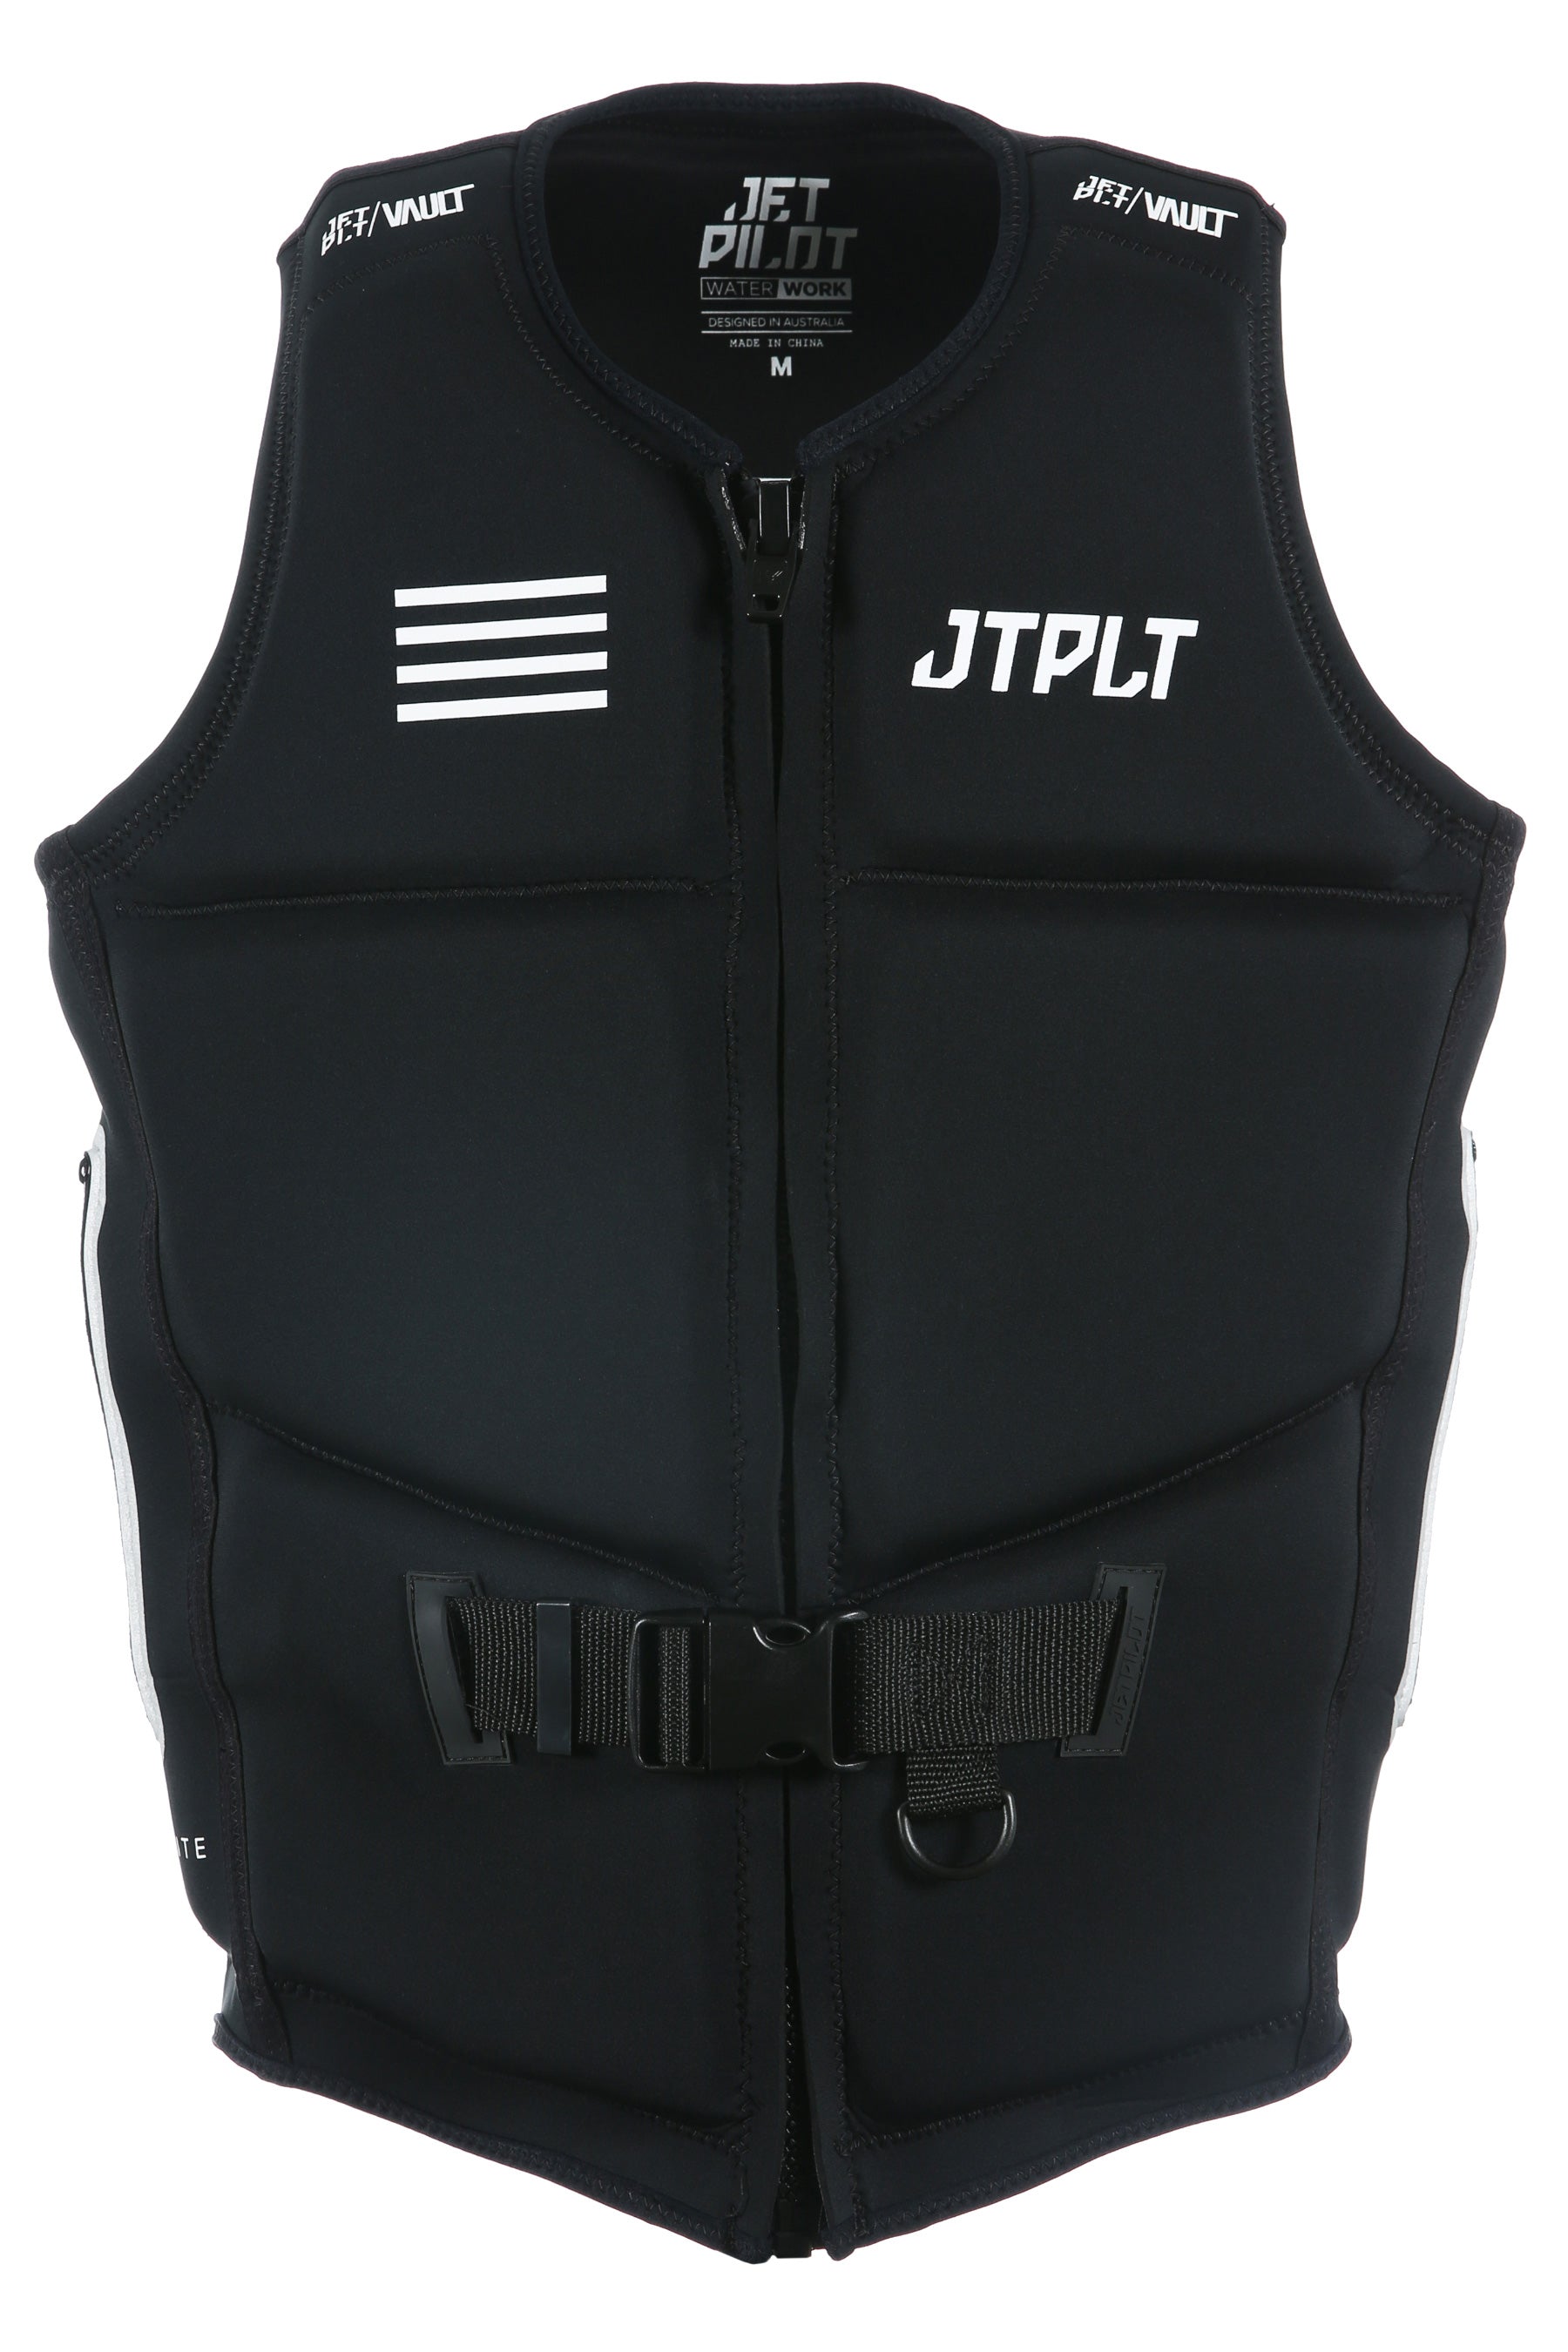 Jetpilot Vault Mens Dual Standards Life Jacket - Black/White